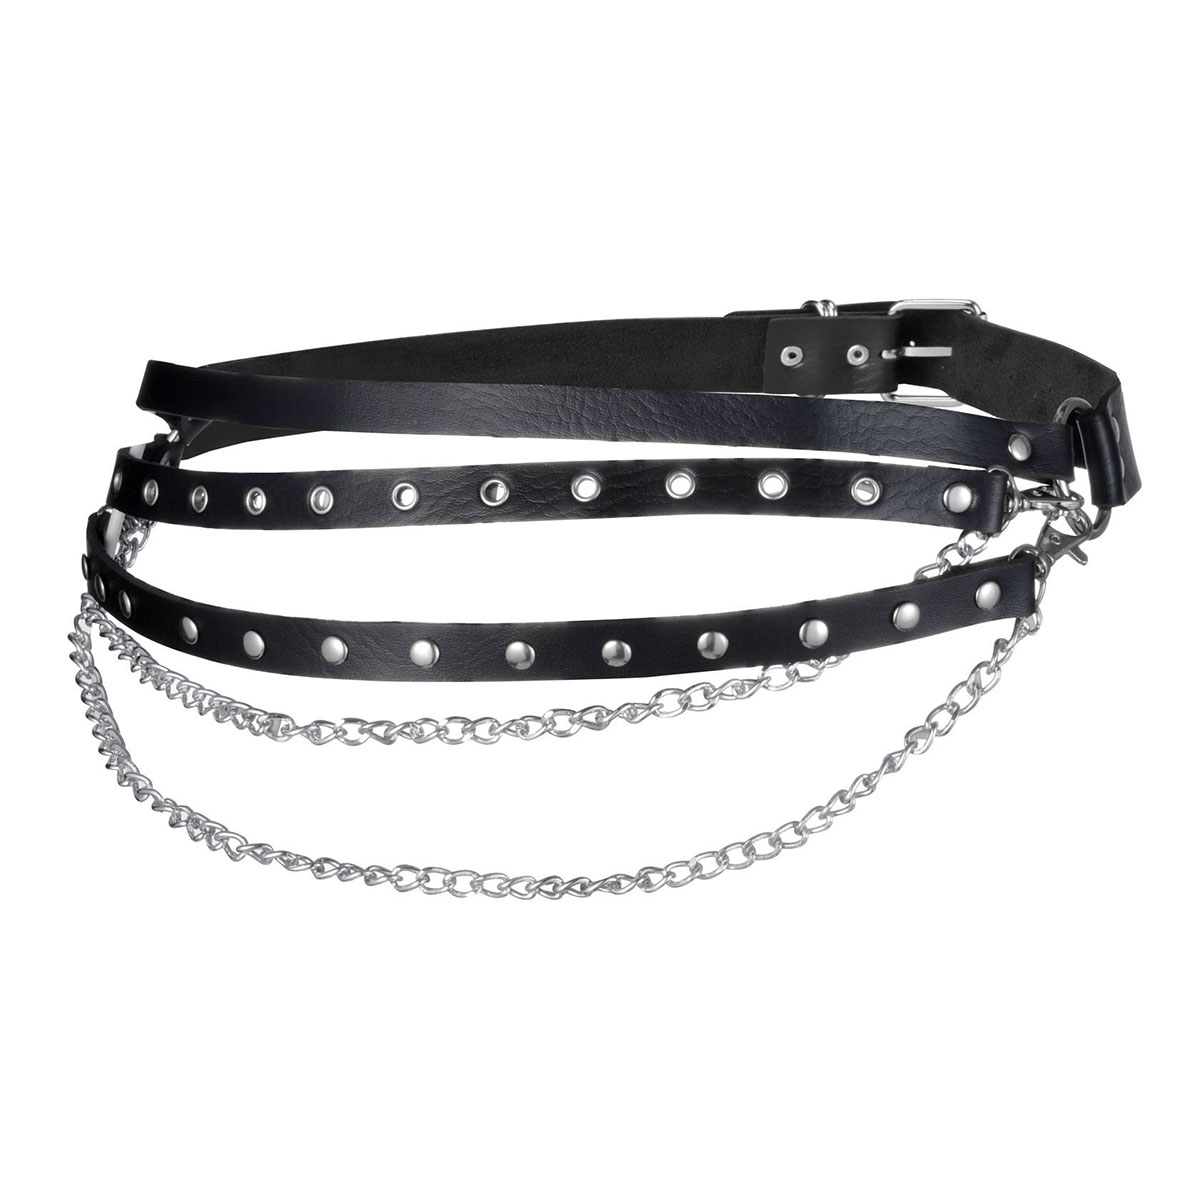 Black punk belt with tripple leather belt